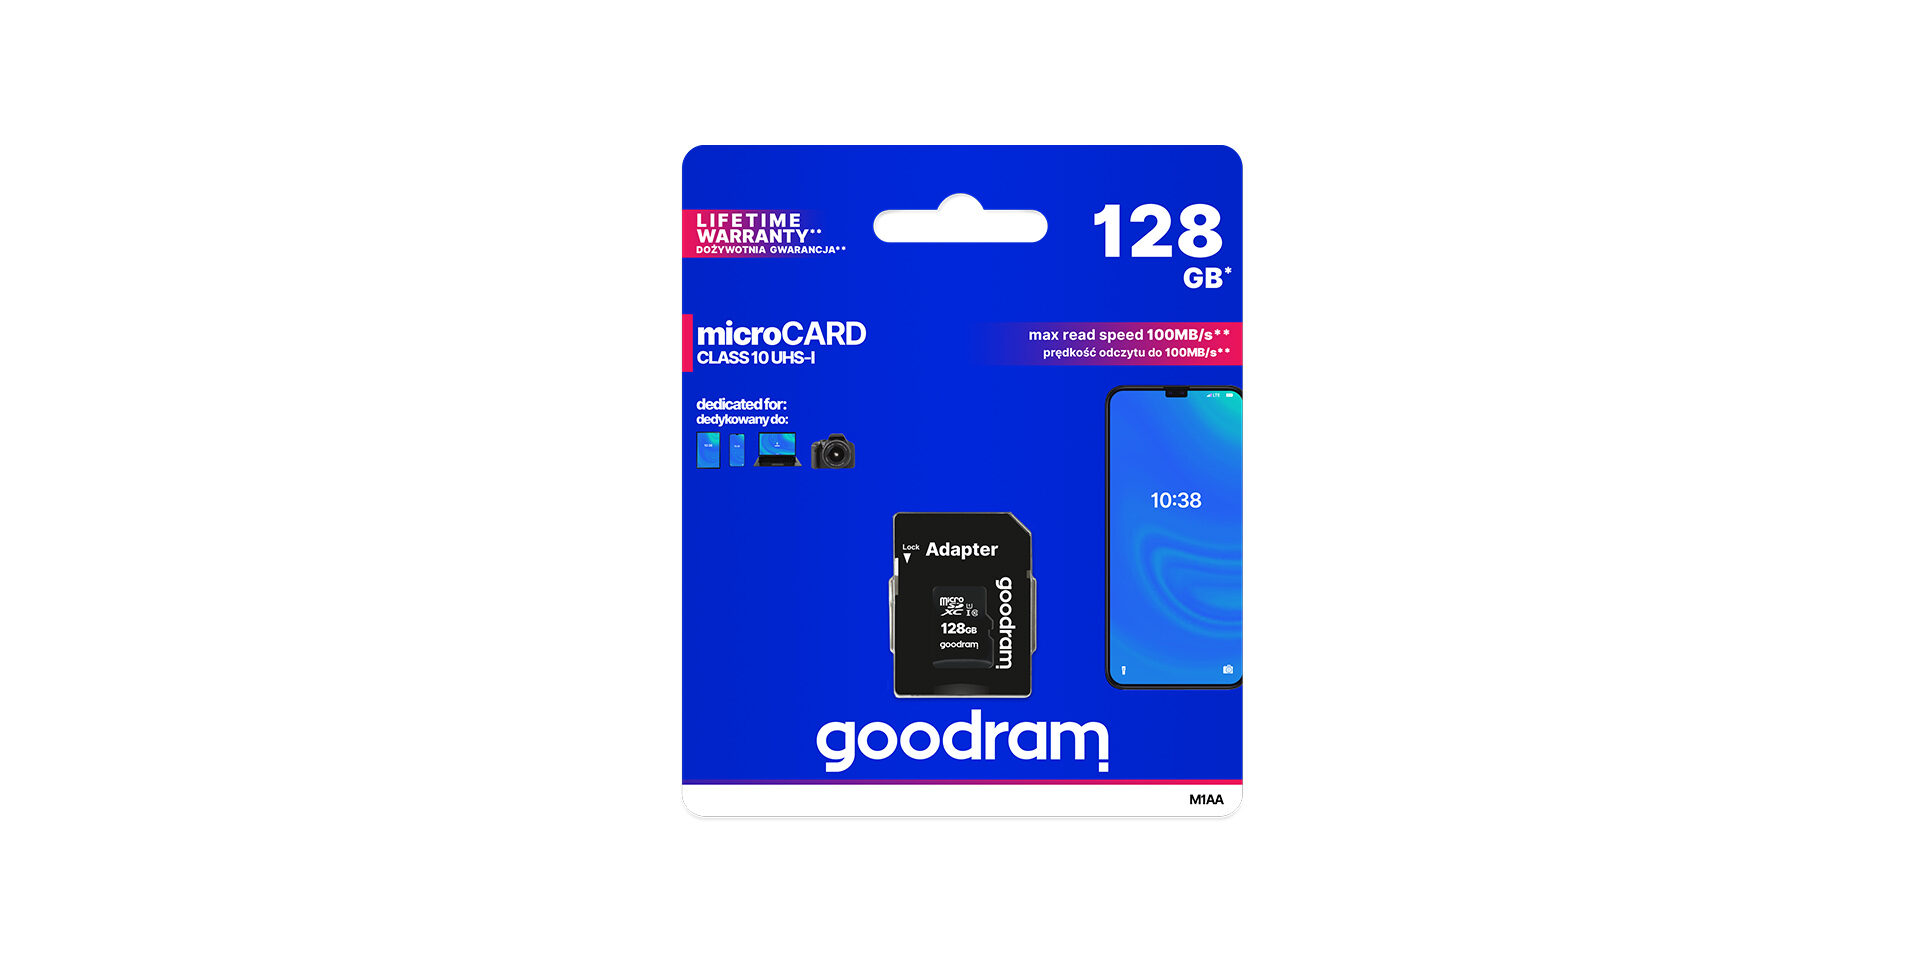 M1A0/M1AA microCARD marki Goodram w opakowaniu z adapterem